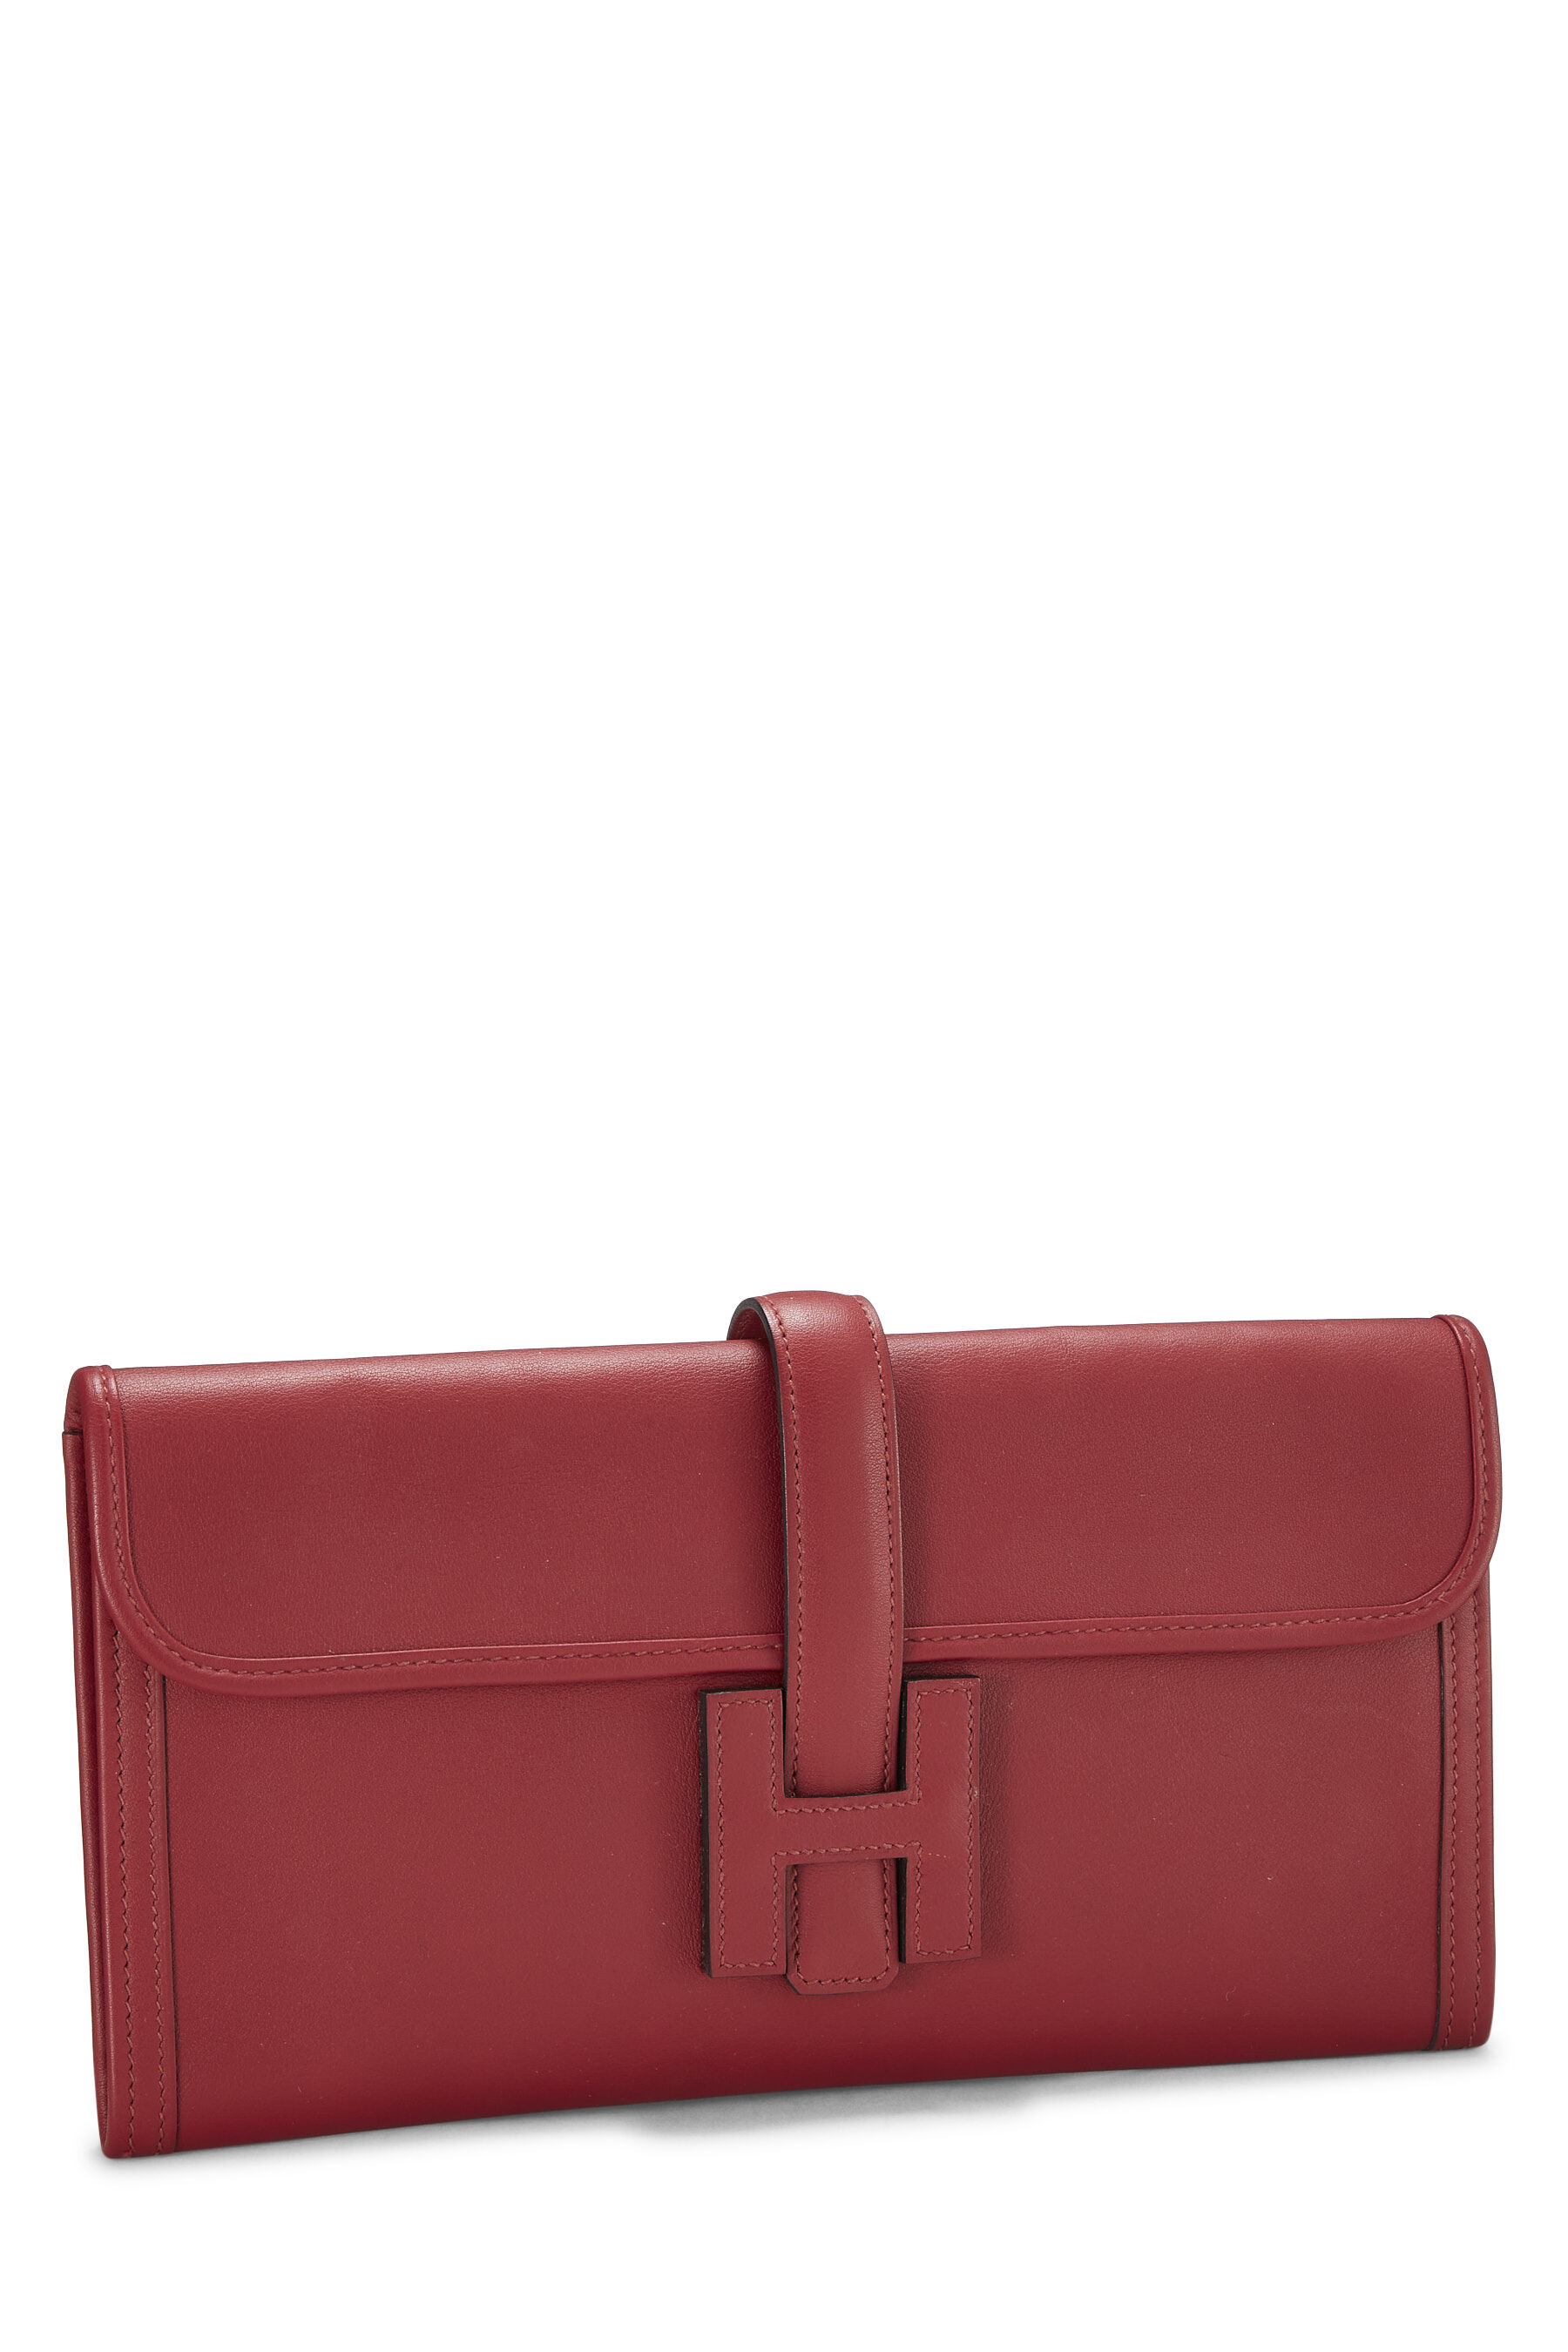 Hermès Rouge Grenat Swift Jige Elan 29 QGBDVY12RB004